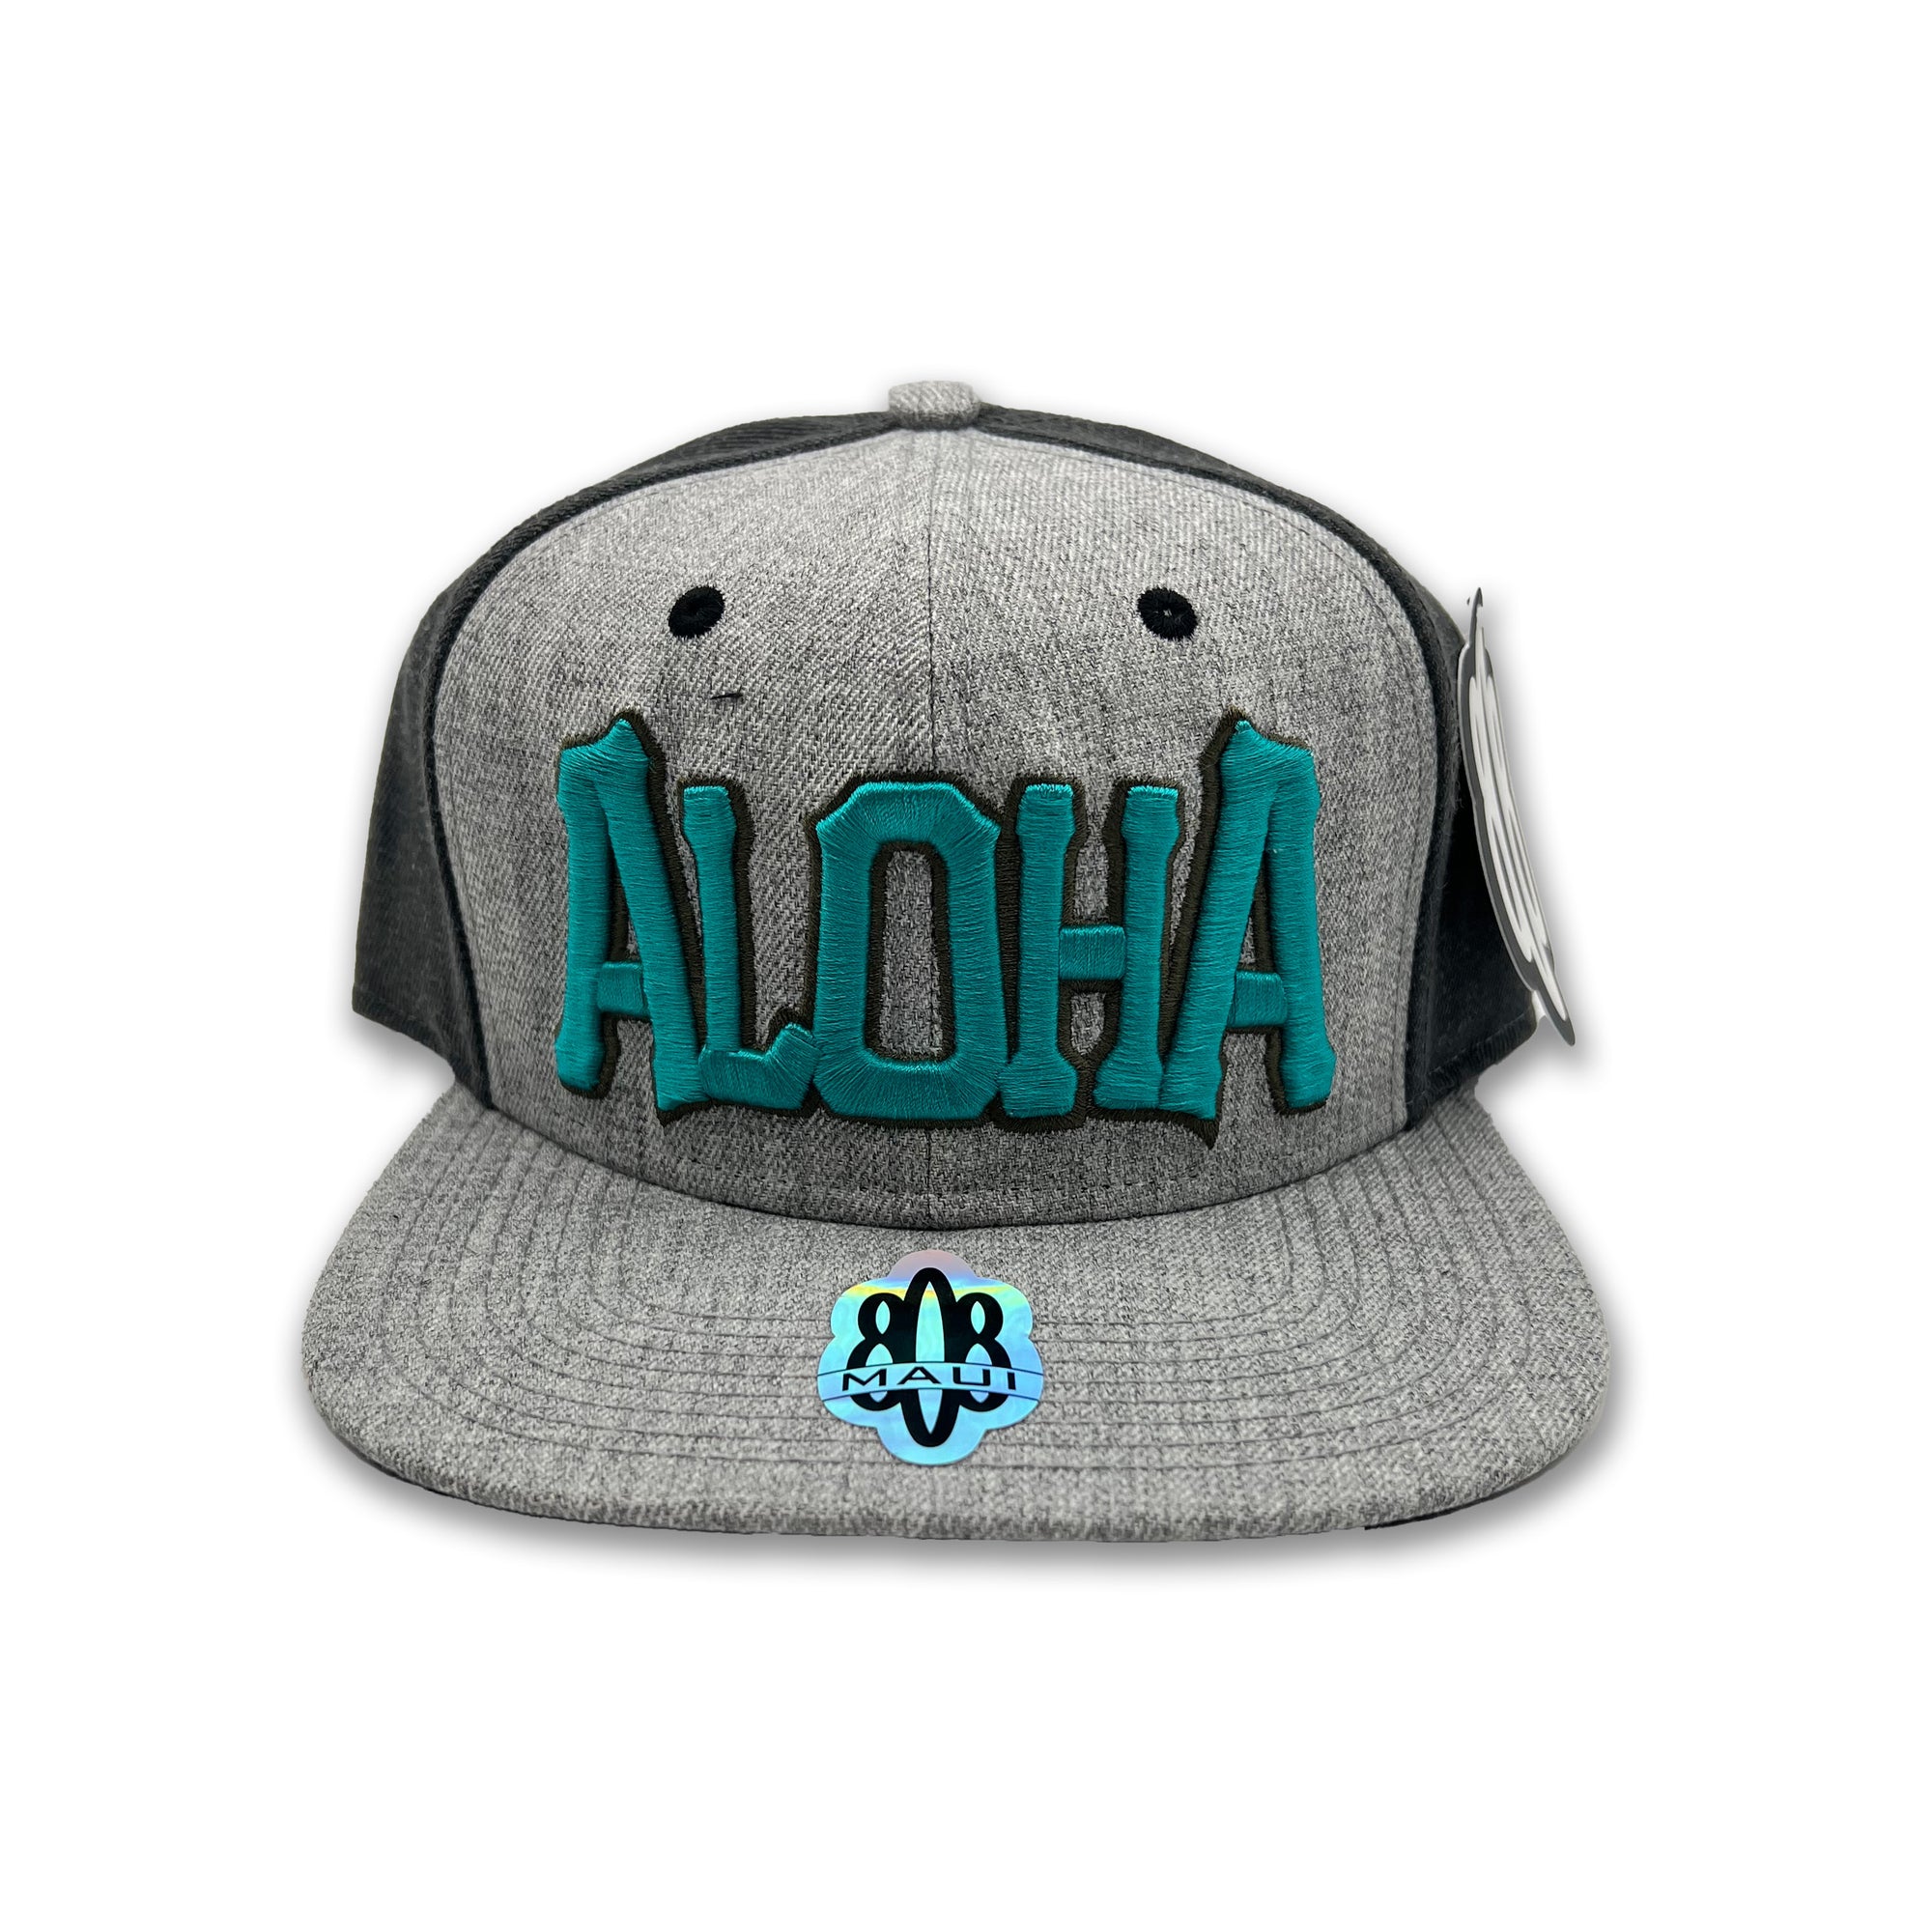 Pop-Up Mākeke - 808 Clothing - Aloha3 Snapback Flat Bill Hat - Front View